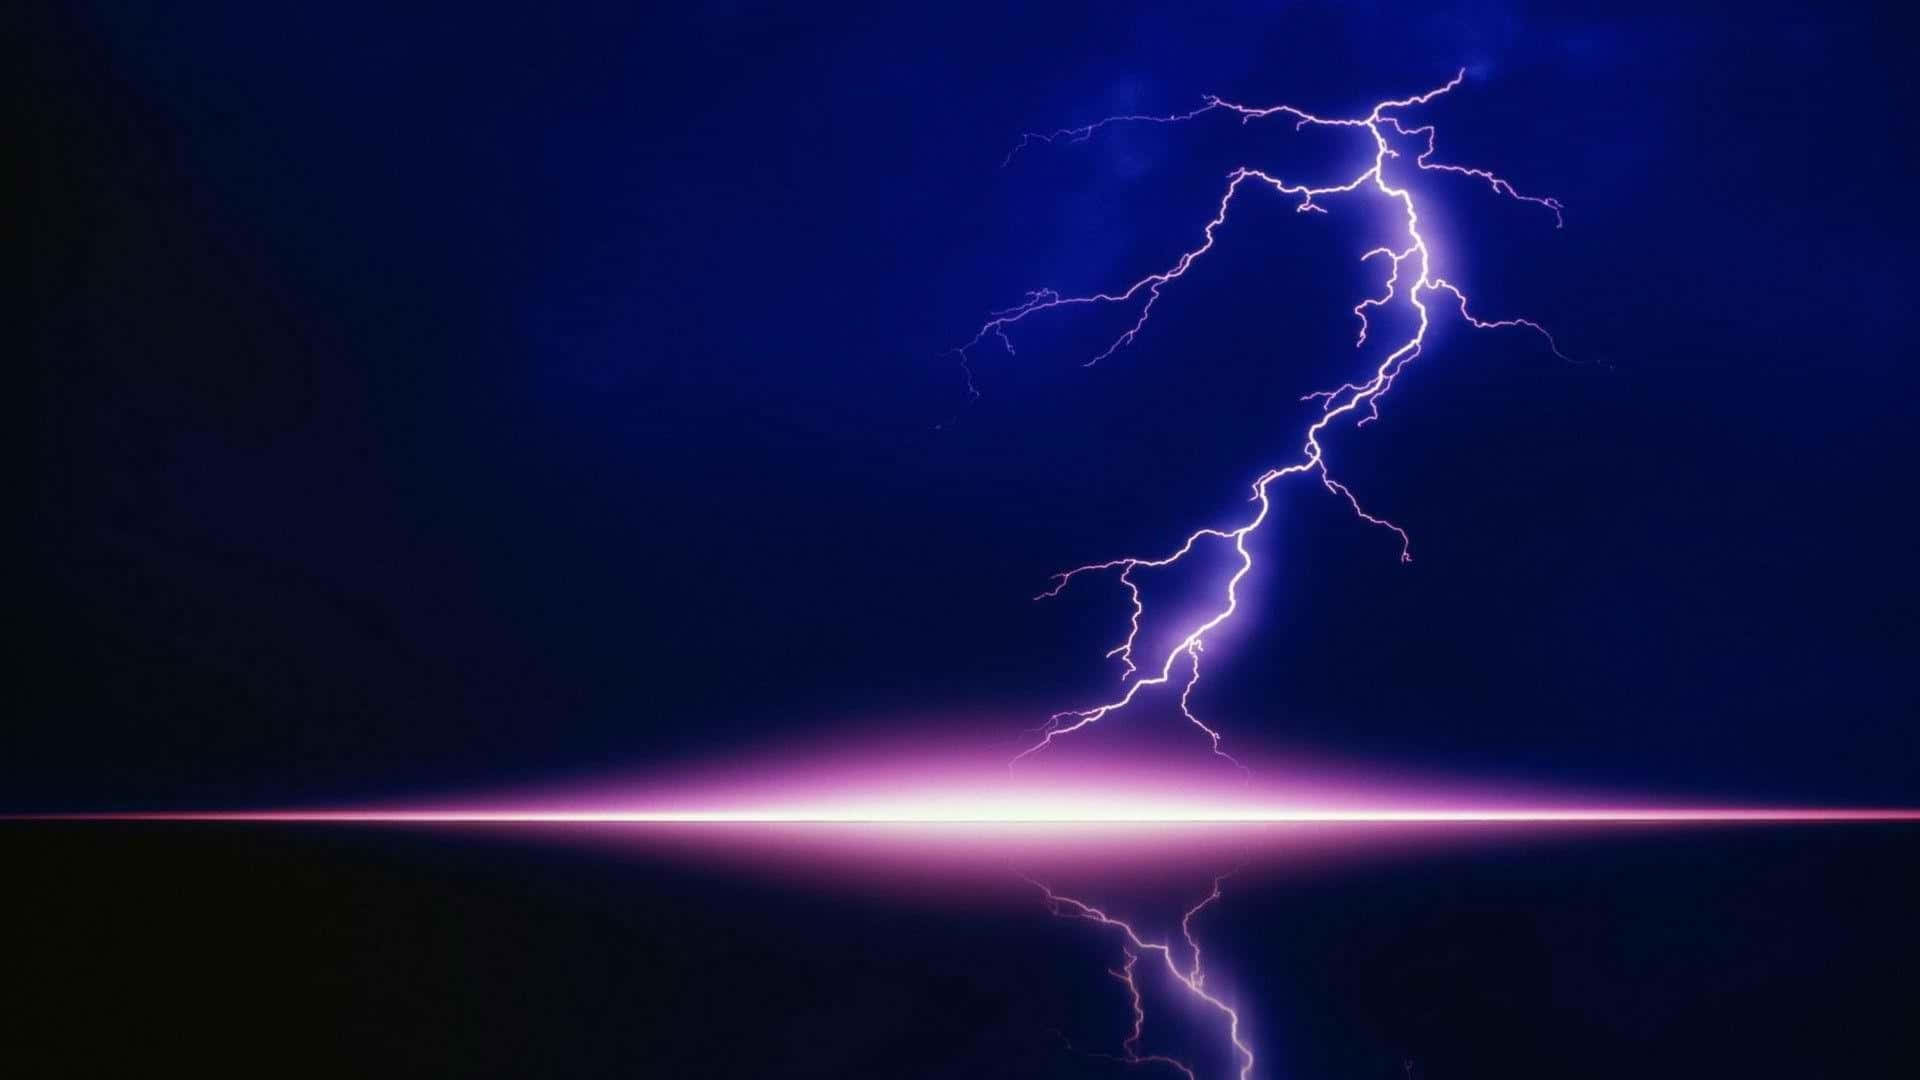 A vivid image of blue lightning crackling through the night sky